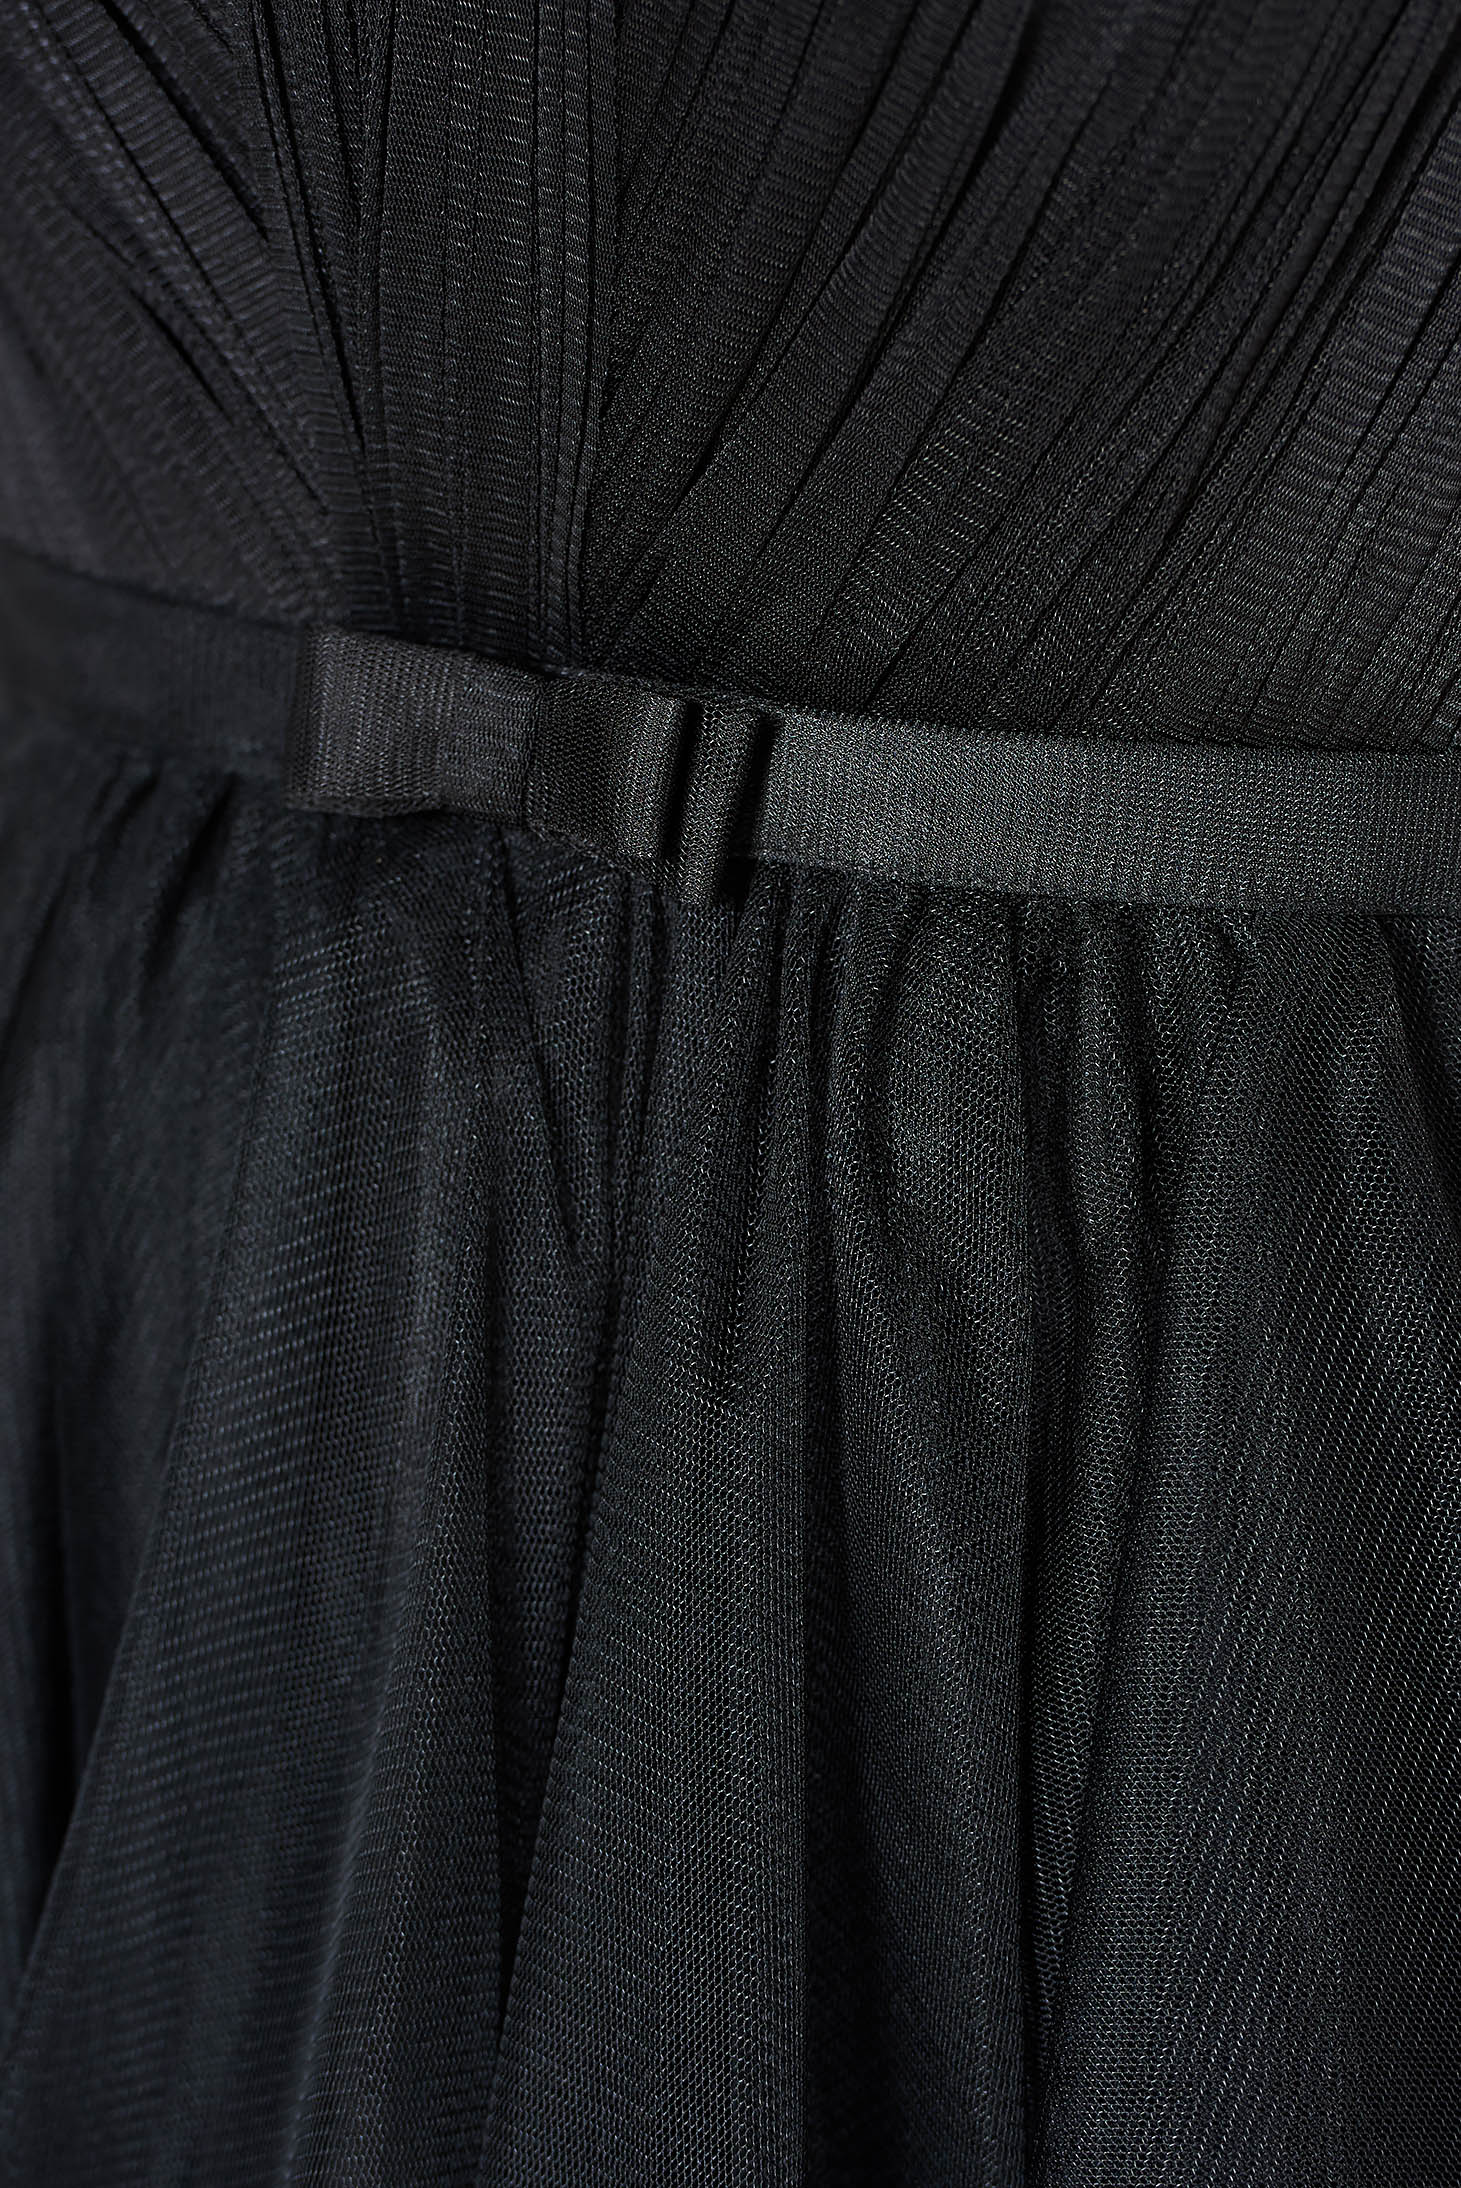 Ana Radu black occasional corset dress with push-up cups 4 - StarShinerS.com